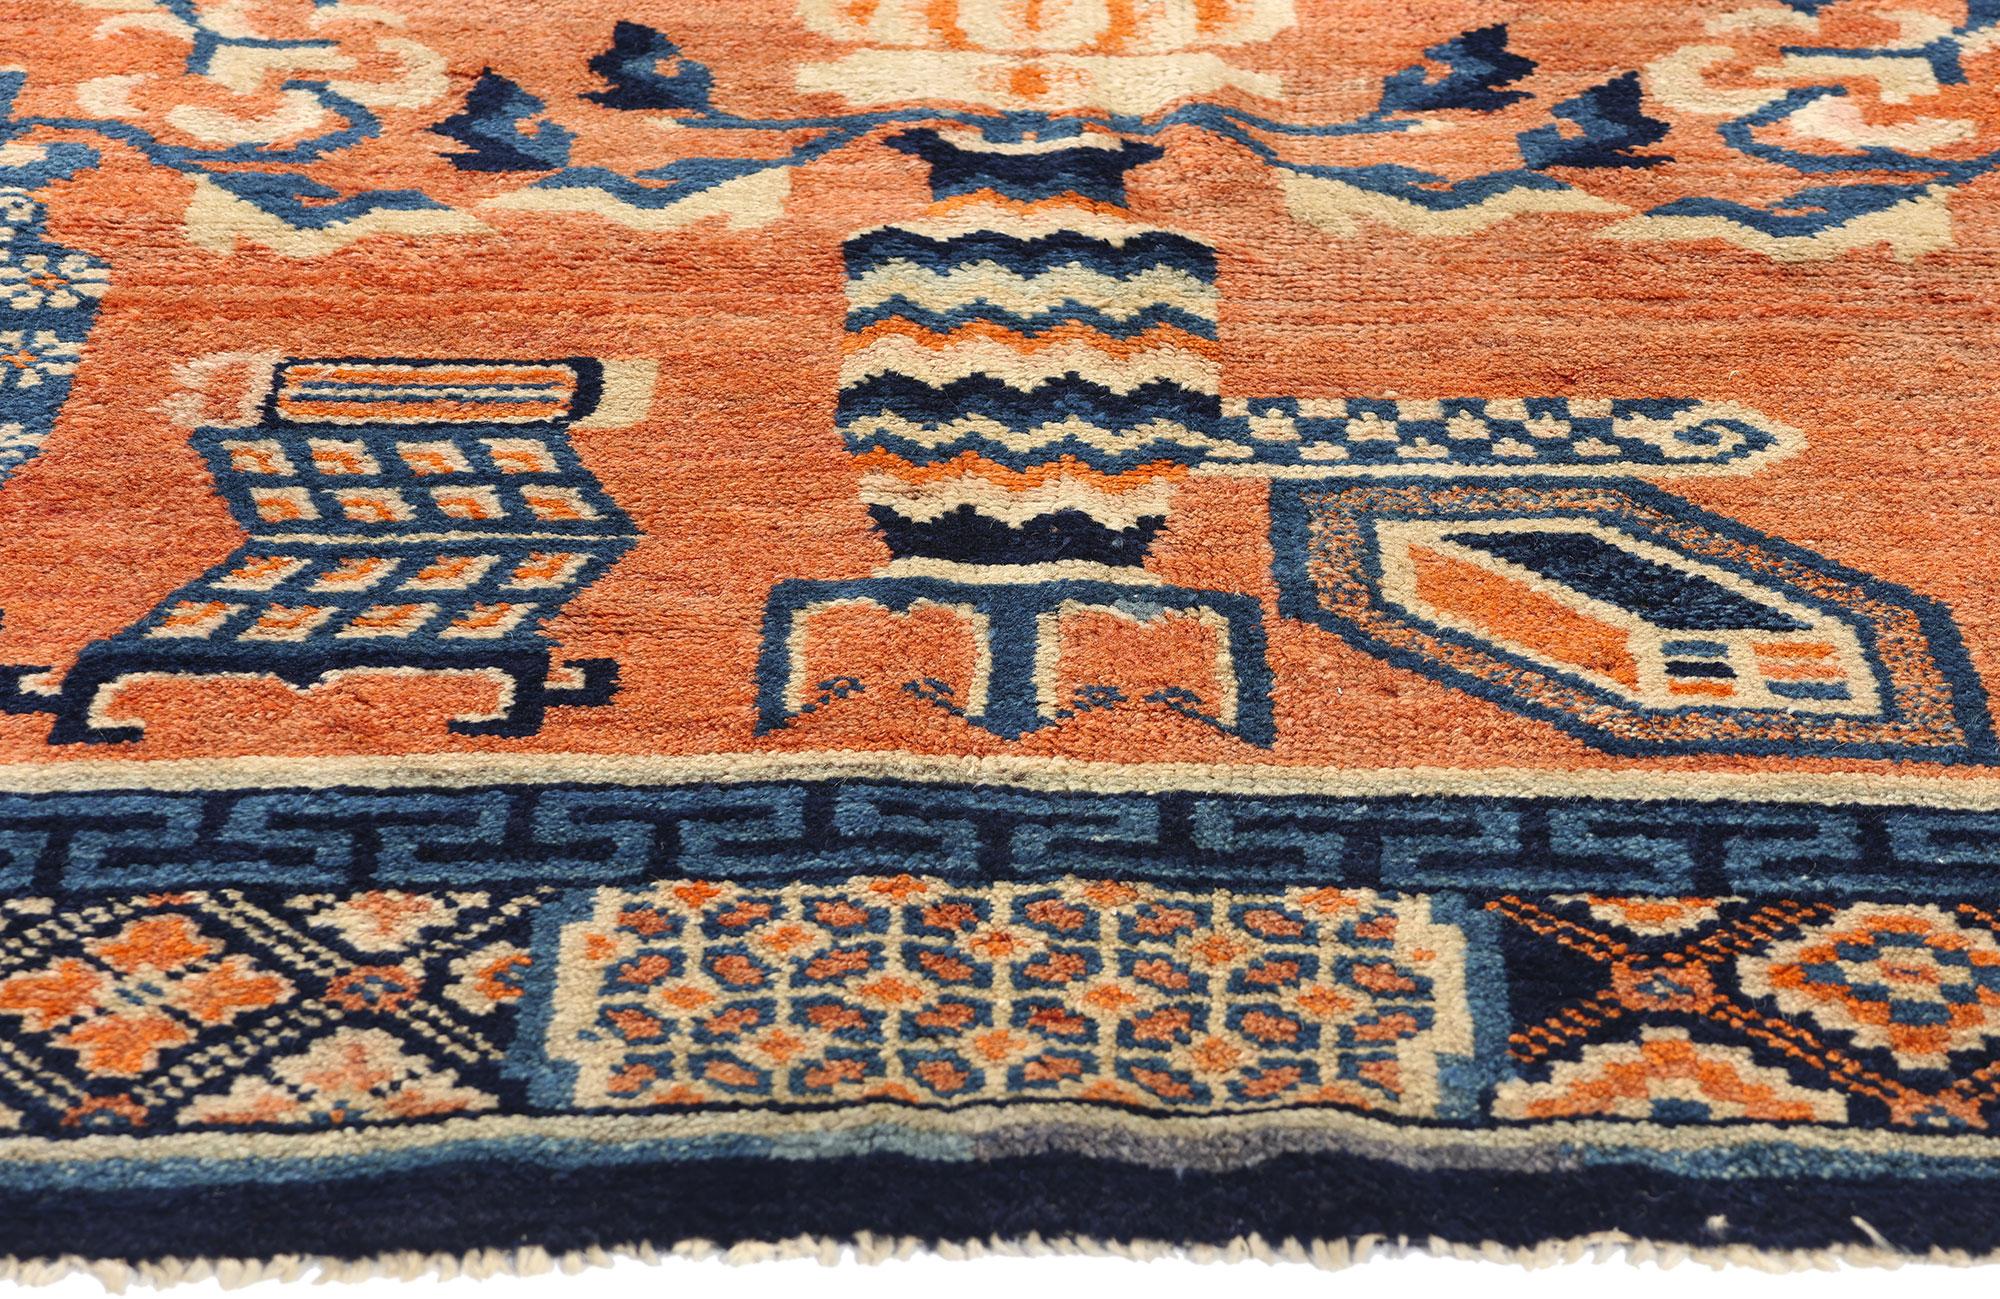 Hand-Woven Vintage Orange Chinese Baotou Vase Pictorial Carpet For Sale